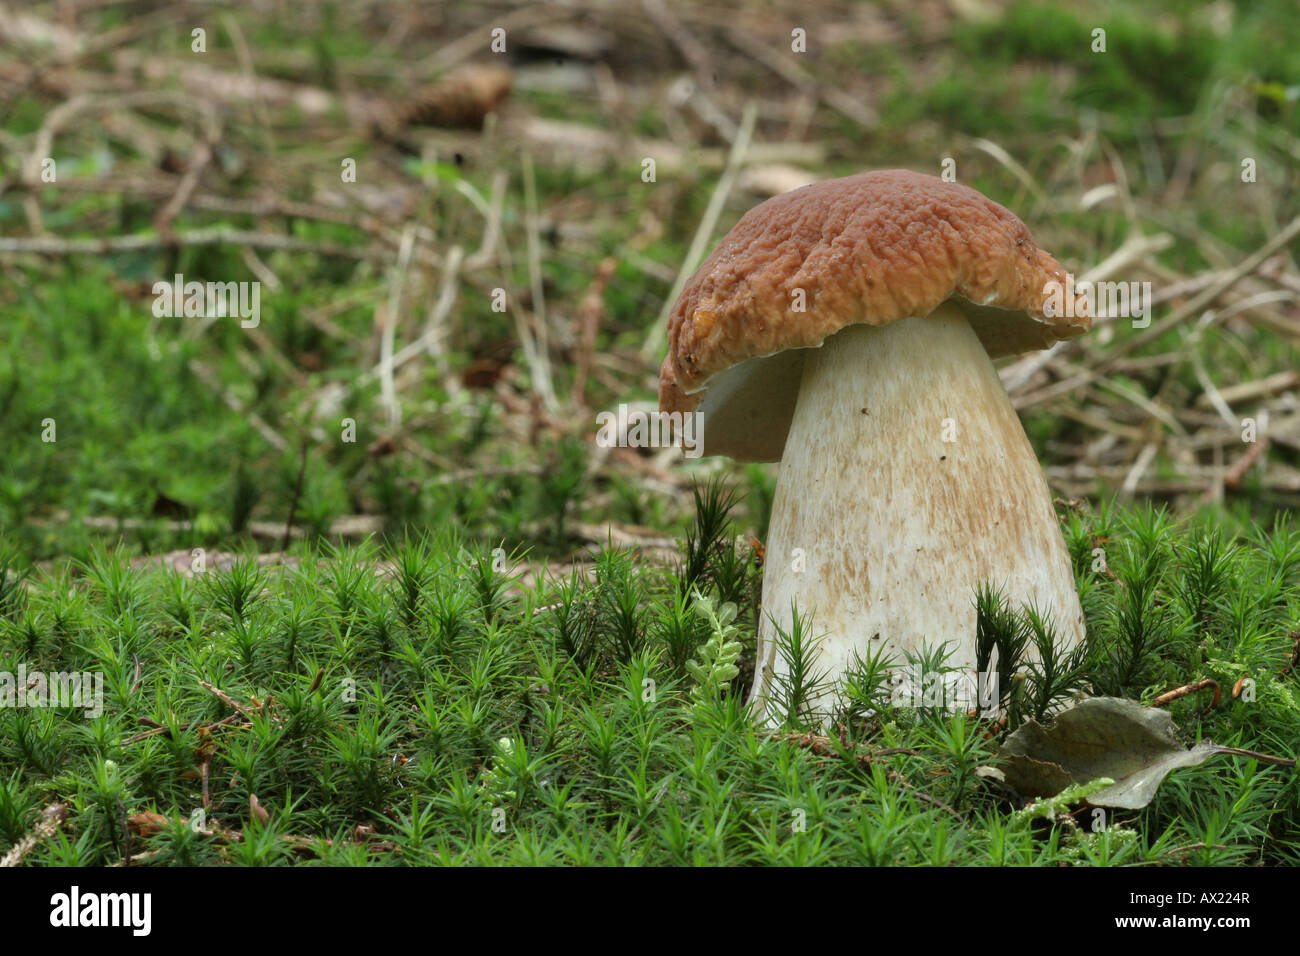 Porcini mushroom (Boletus edulis) in forest moss Stock Photo